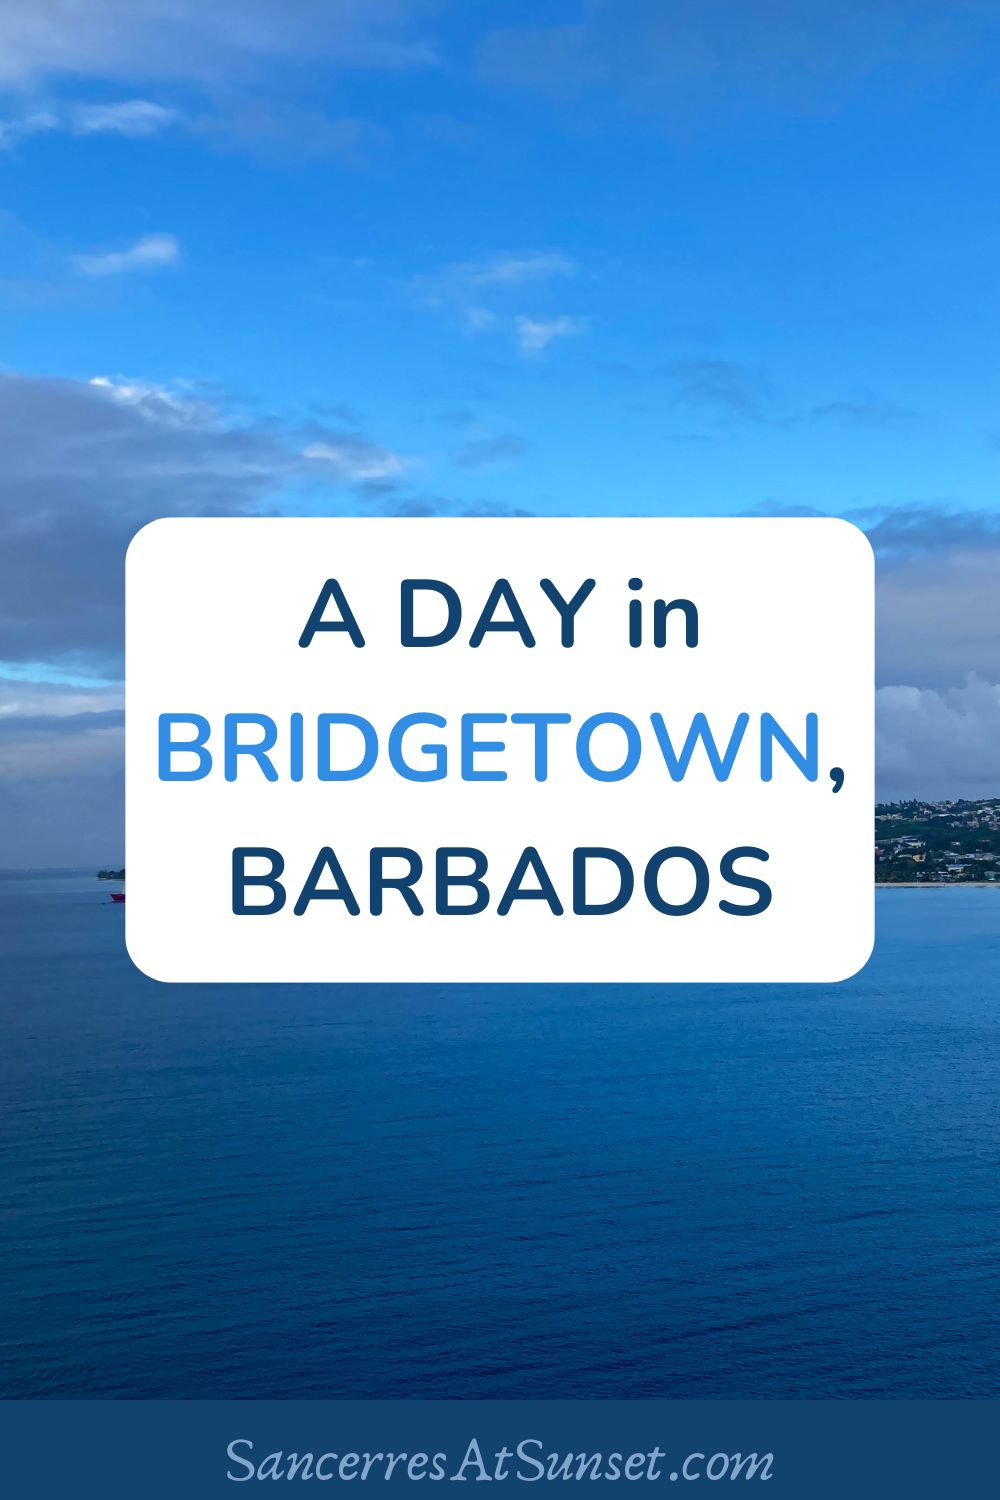 A Day in Bridgetown, Barbados